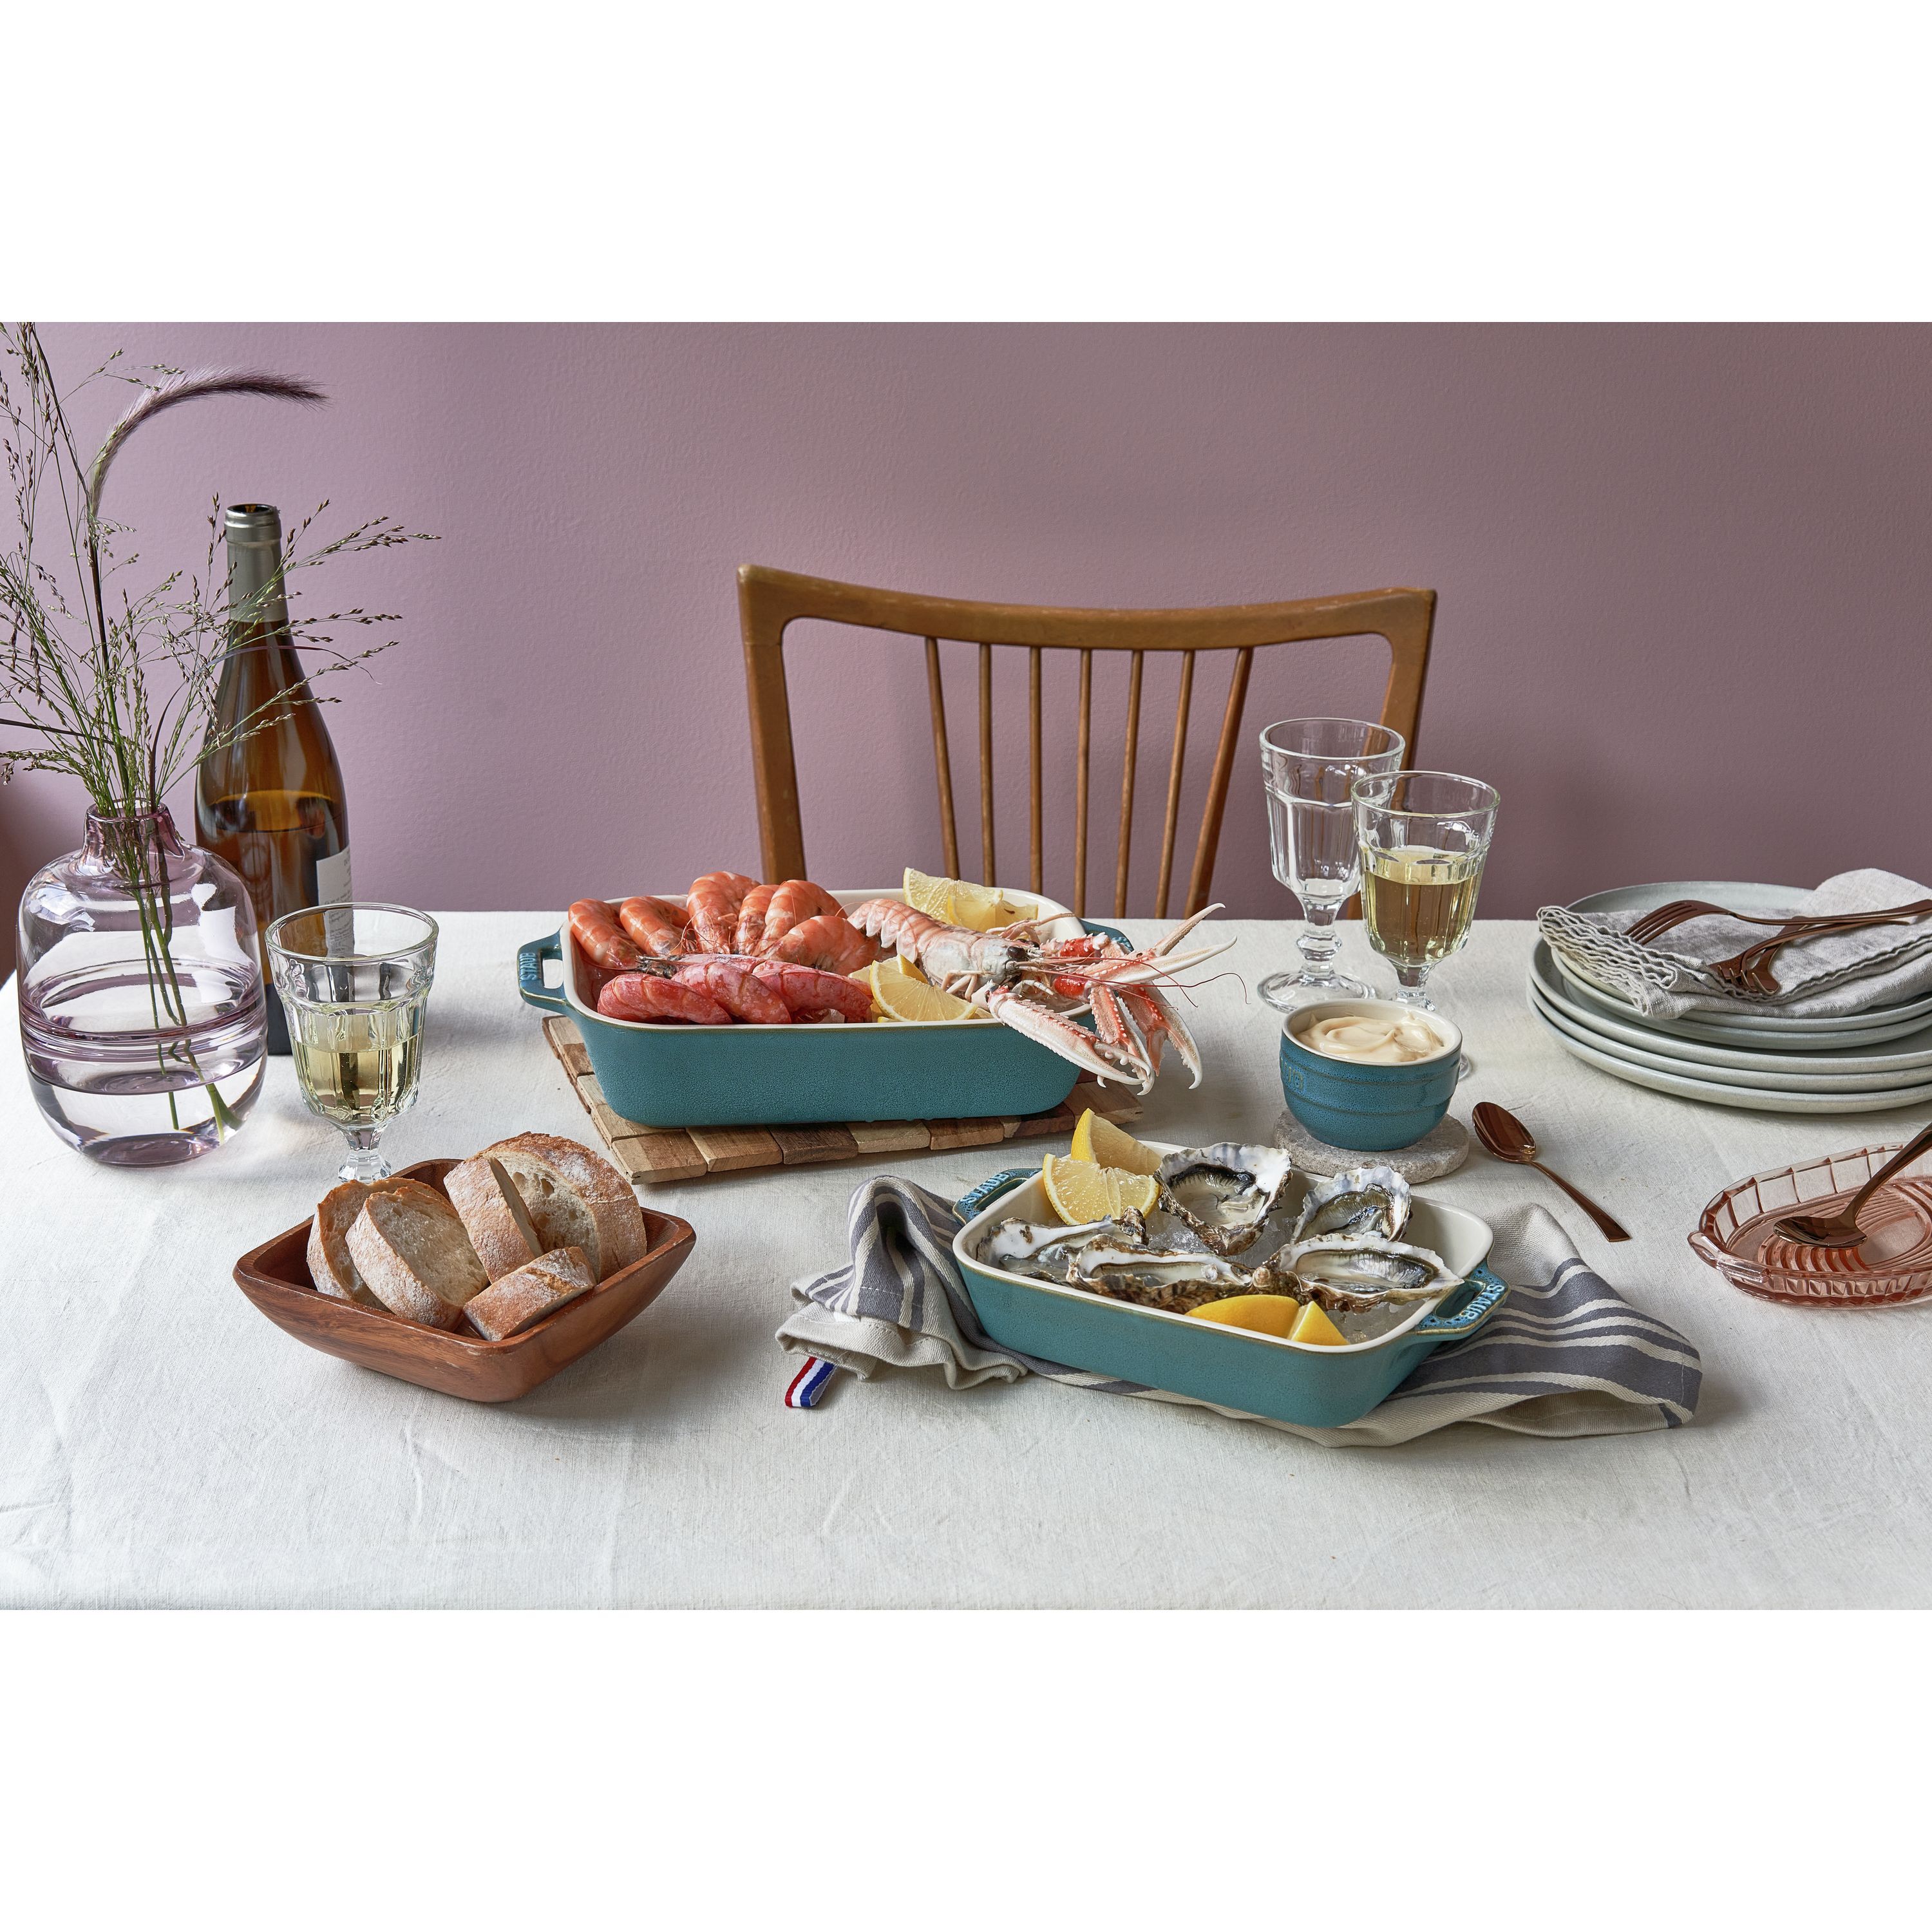 10.5-x 7.5-inch, rectangular, Baking Dish, rustic turquoise